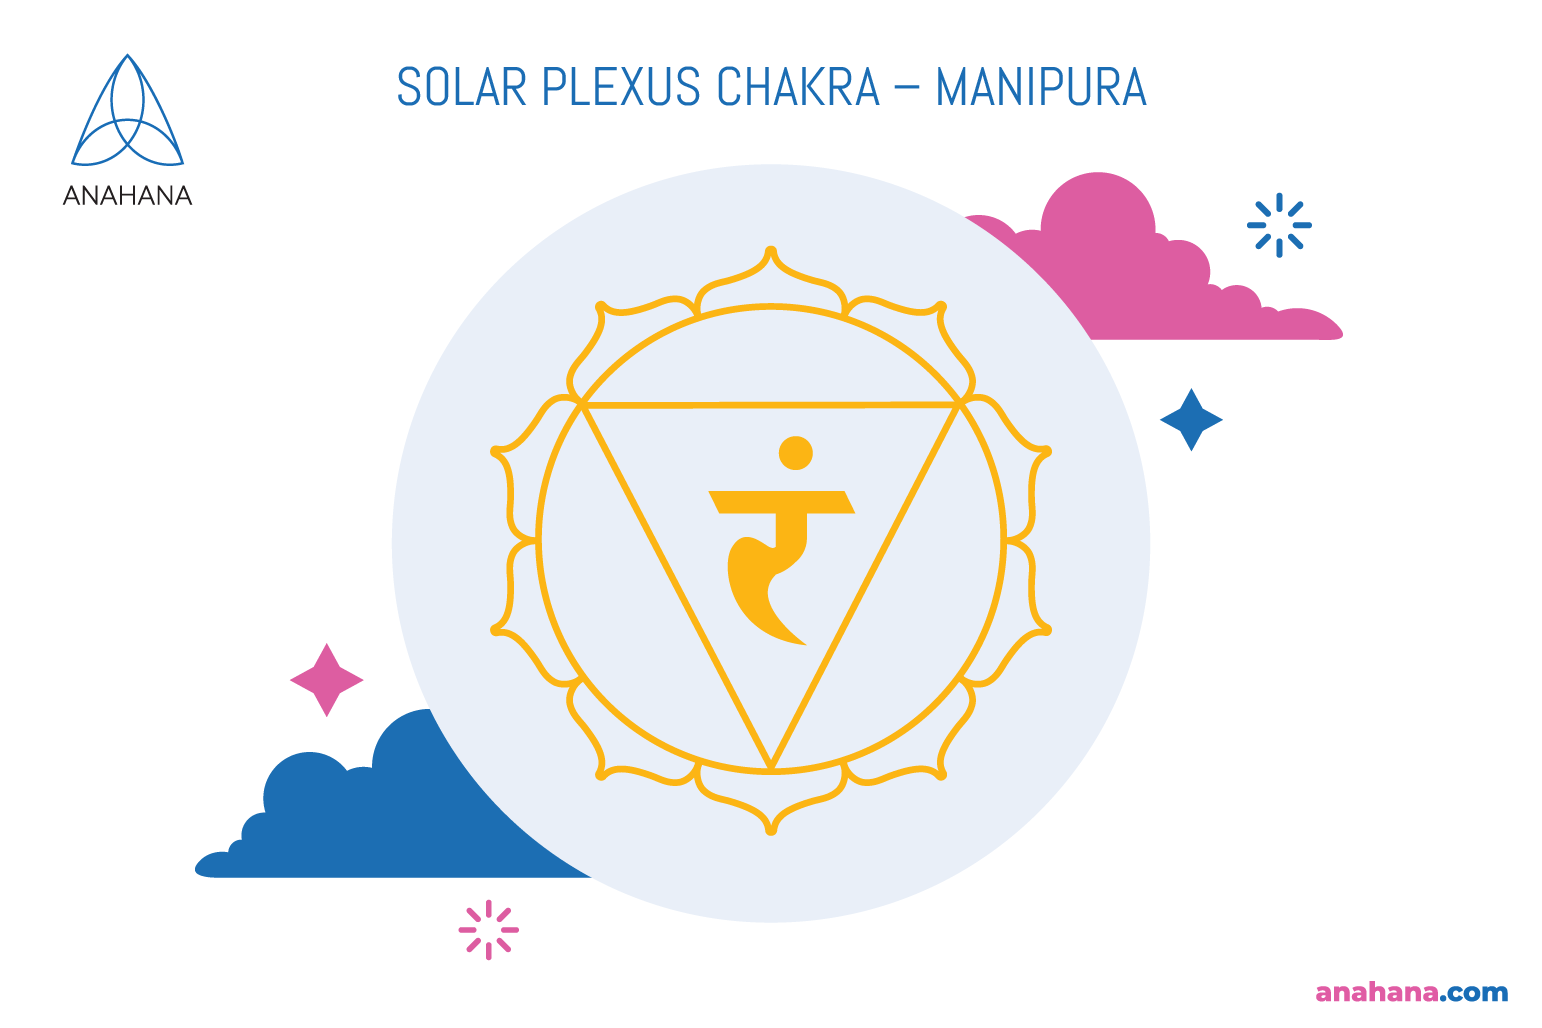 Símbolo del chakra del plexo solar manipura